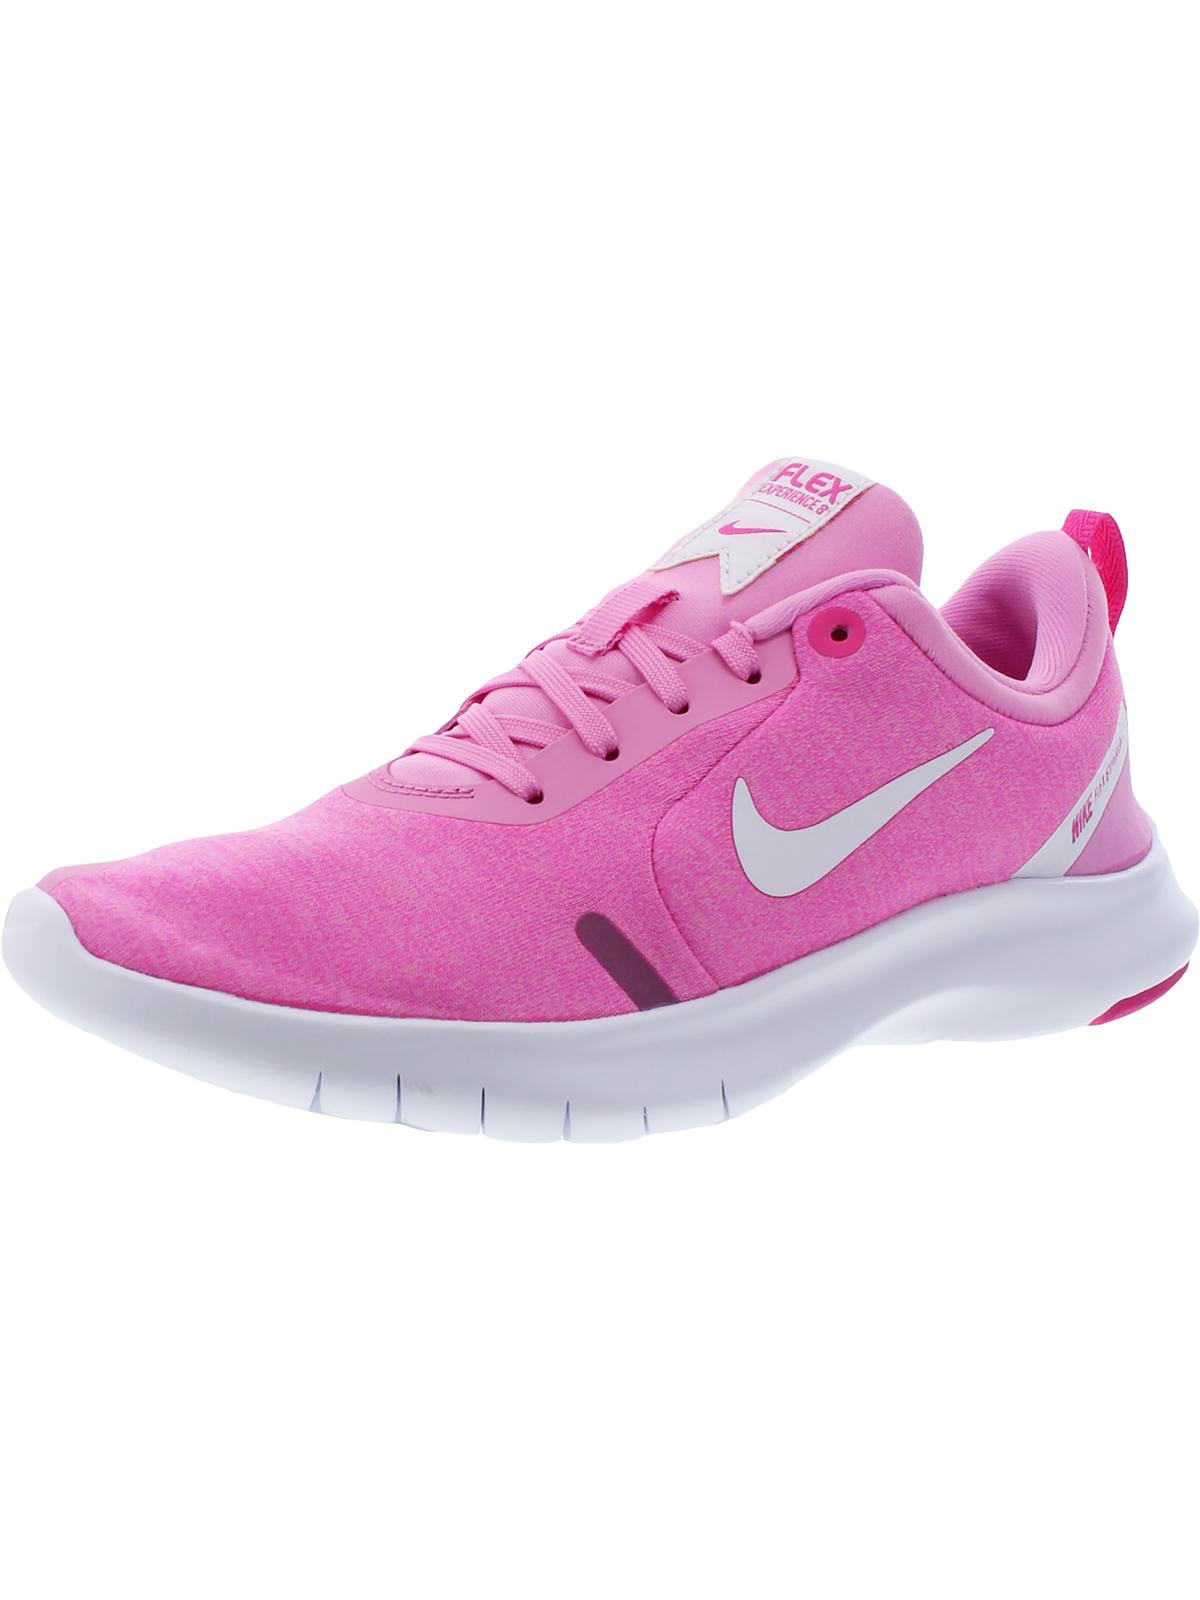 Nike Womens Flex Experience RN 8 Flexible Running Shoes Pink 7.5 Medium ...